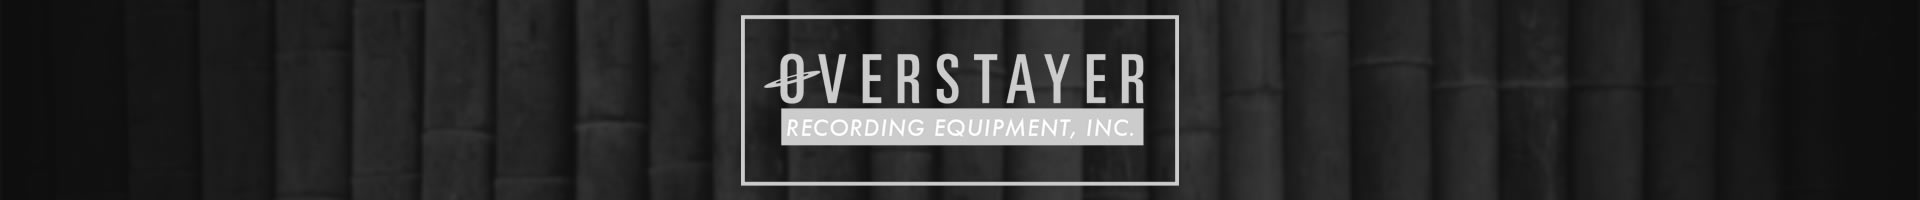 Overstayer Recording Equipment